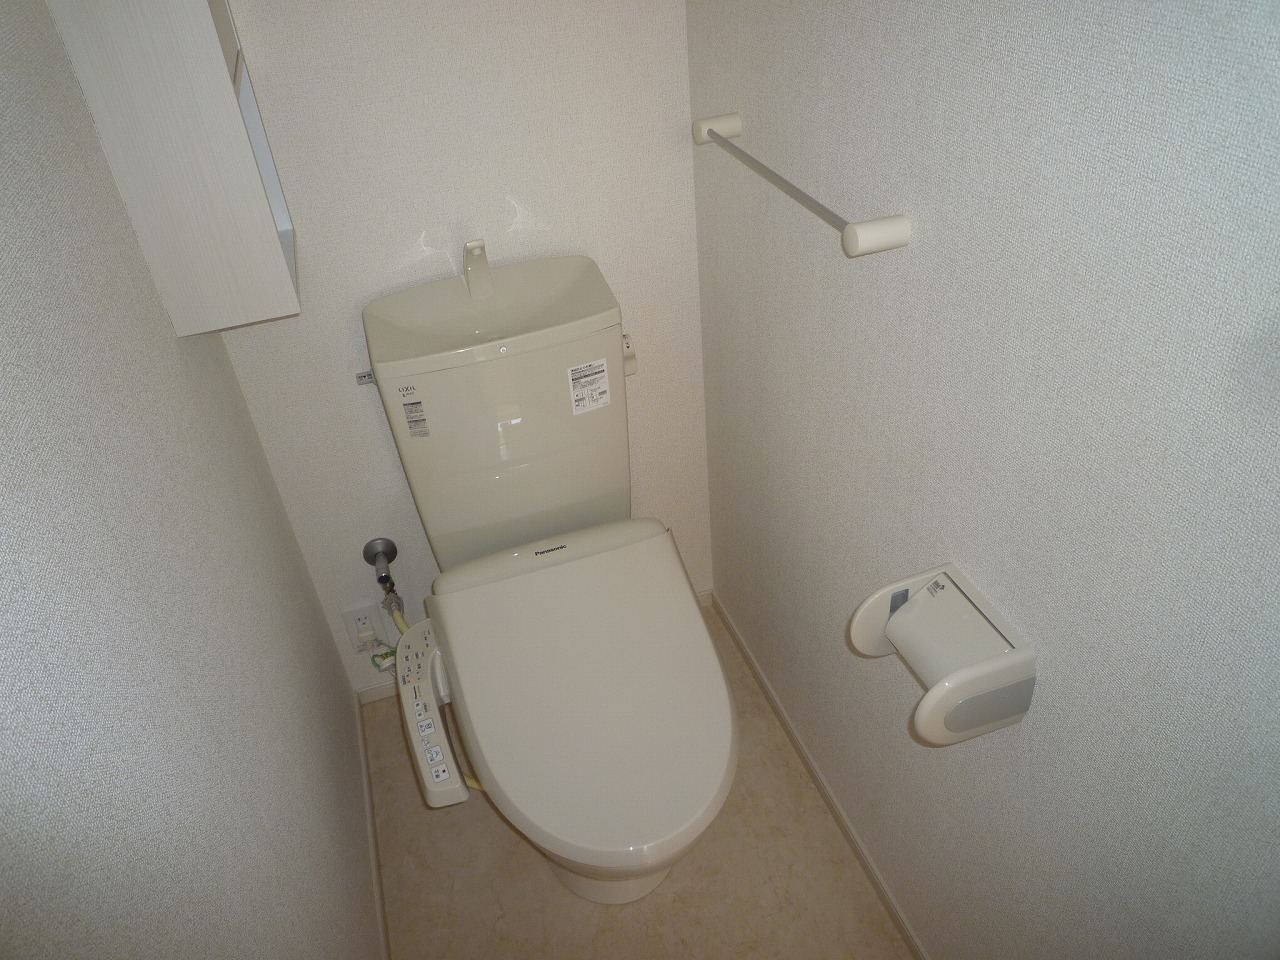 Toilet. Inverted type (Room 201)